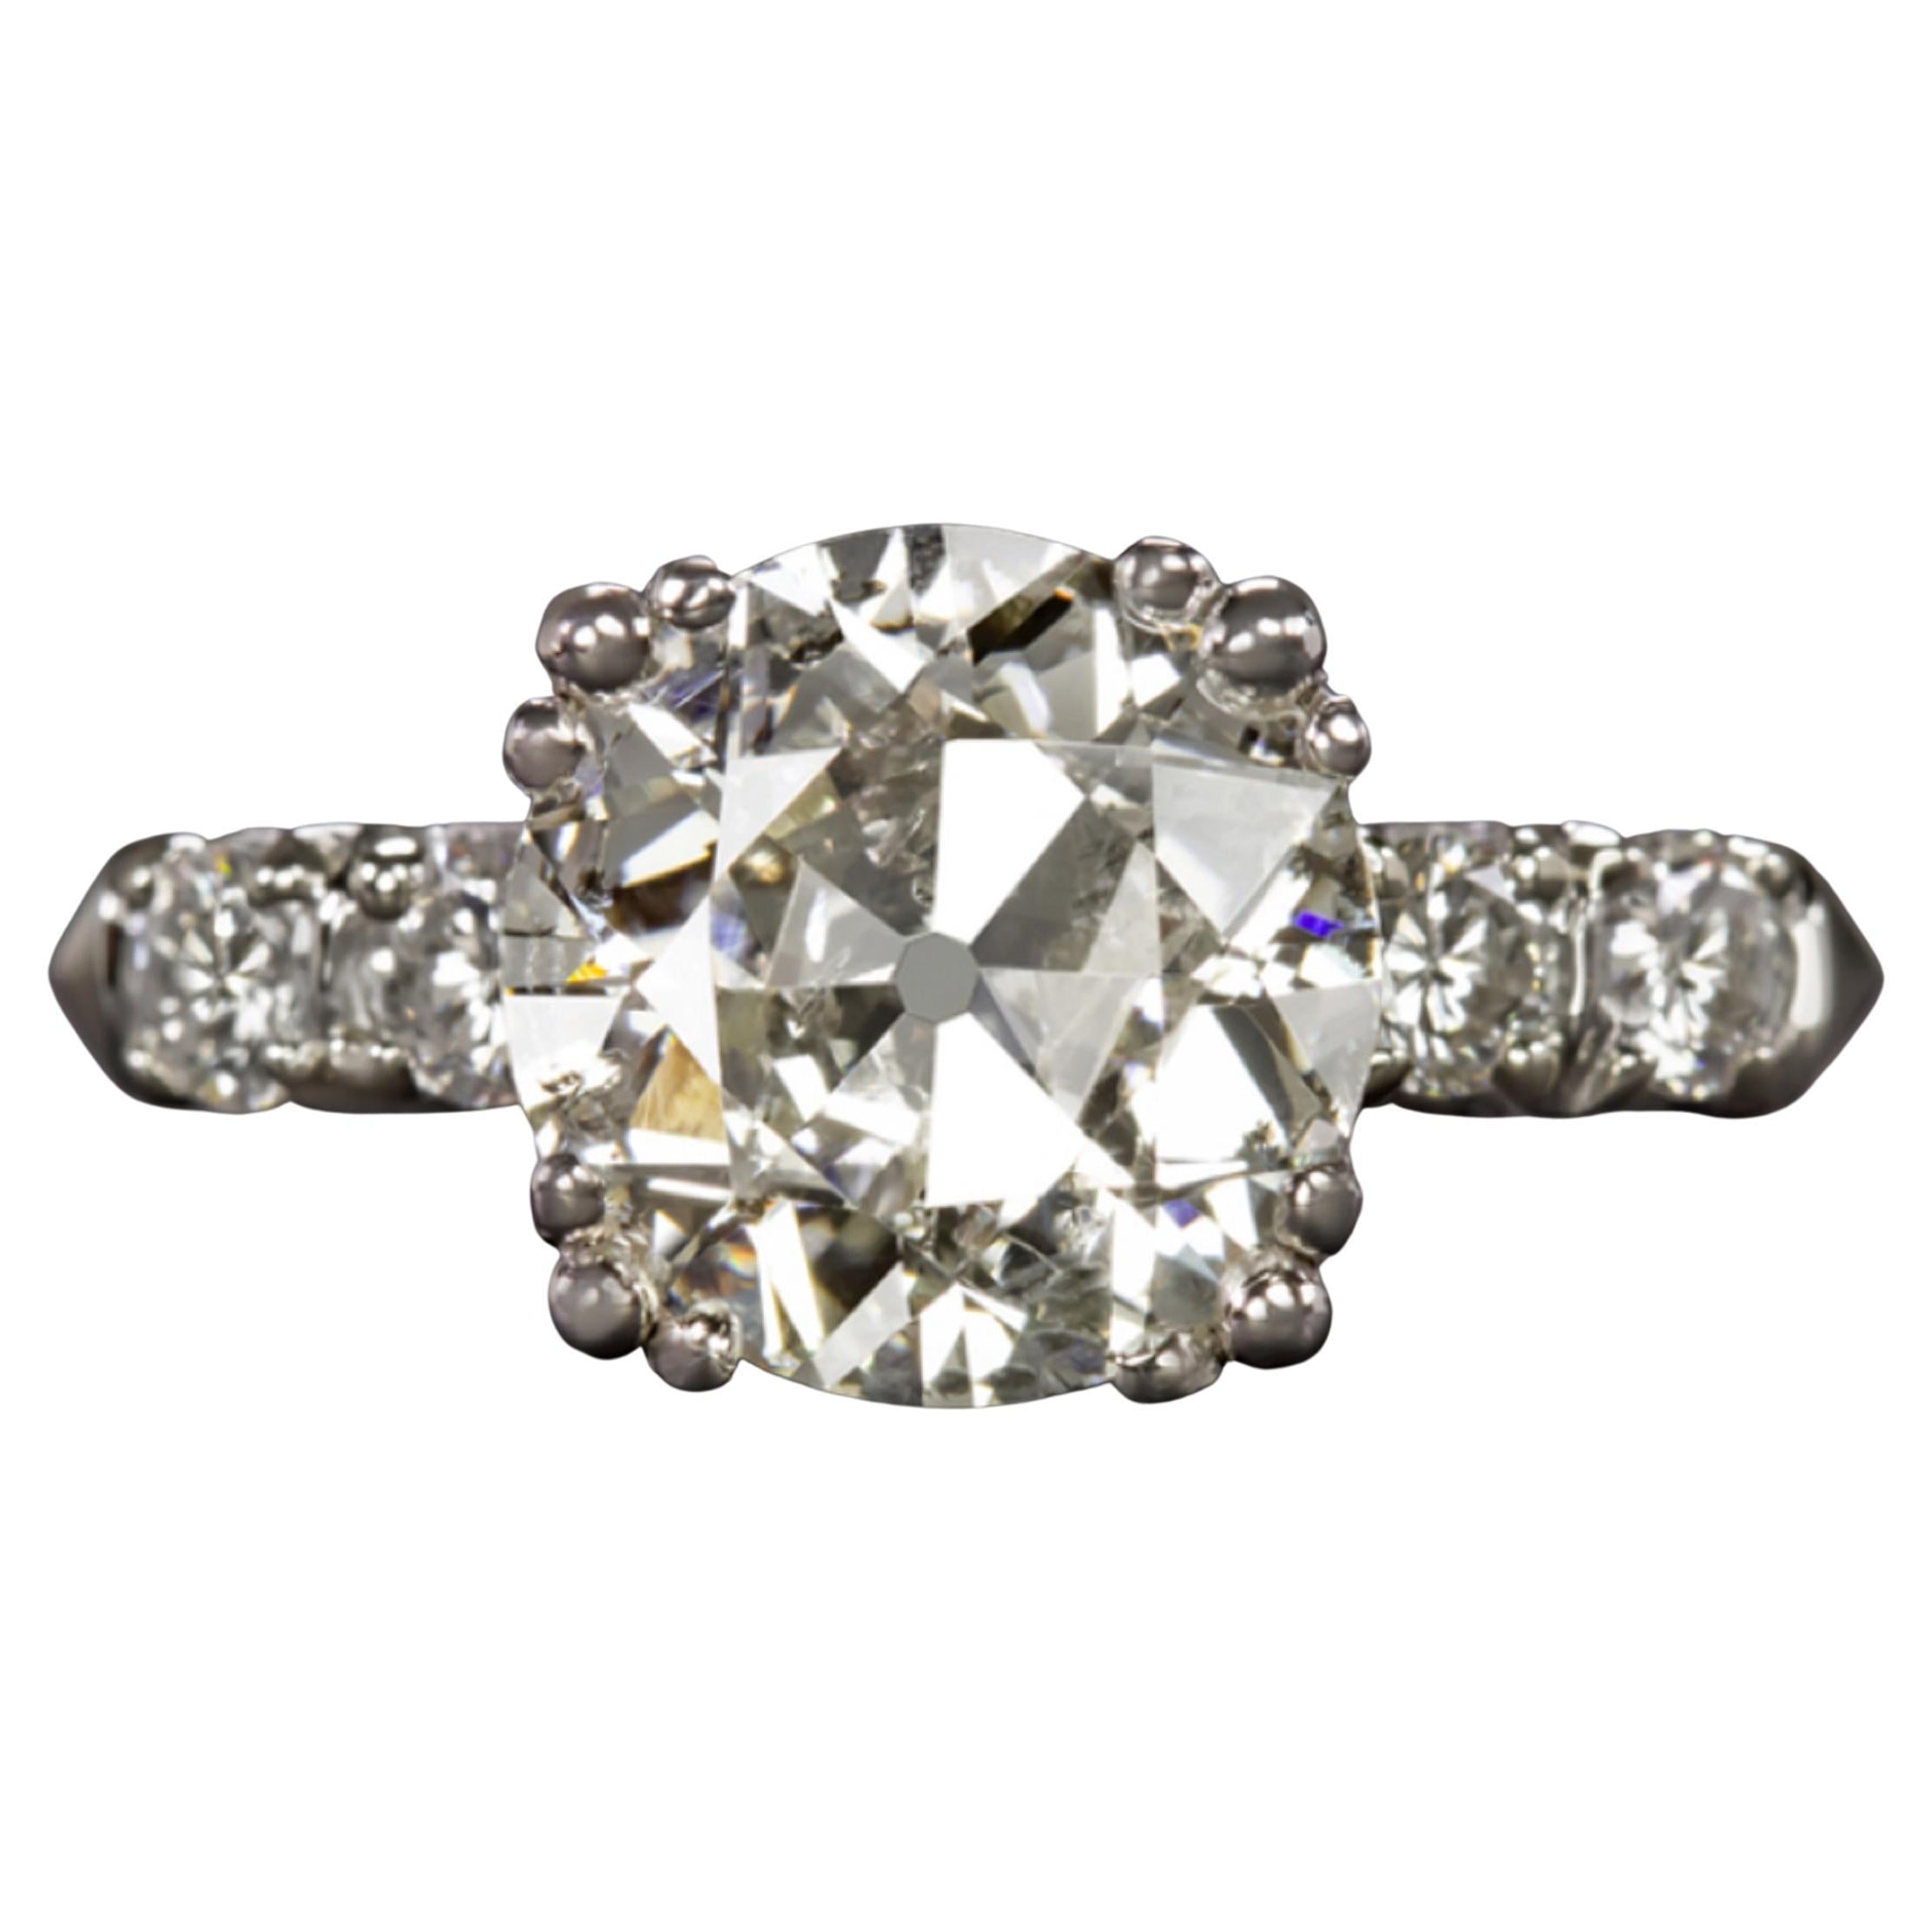 Certified Authentic Vintage Art Deco 1.92 Carat Old Mine Cut Diamond Ring